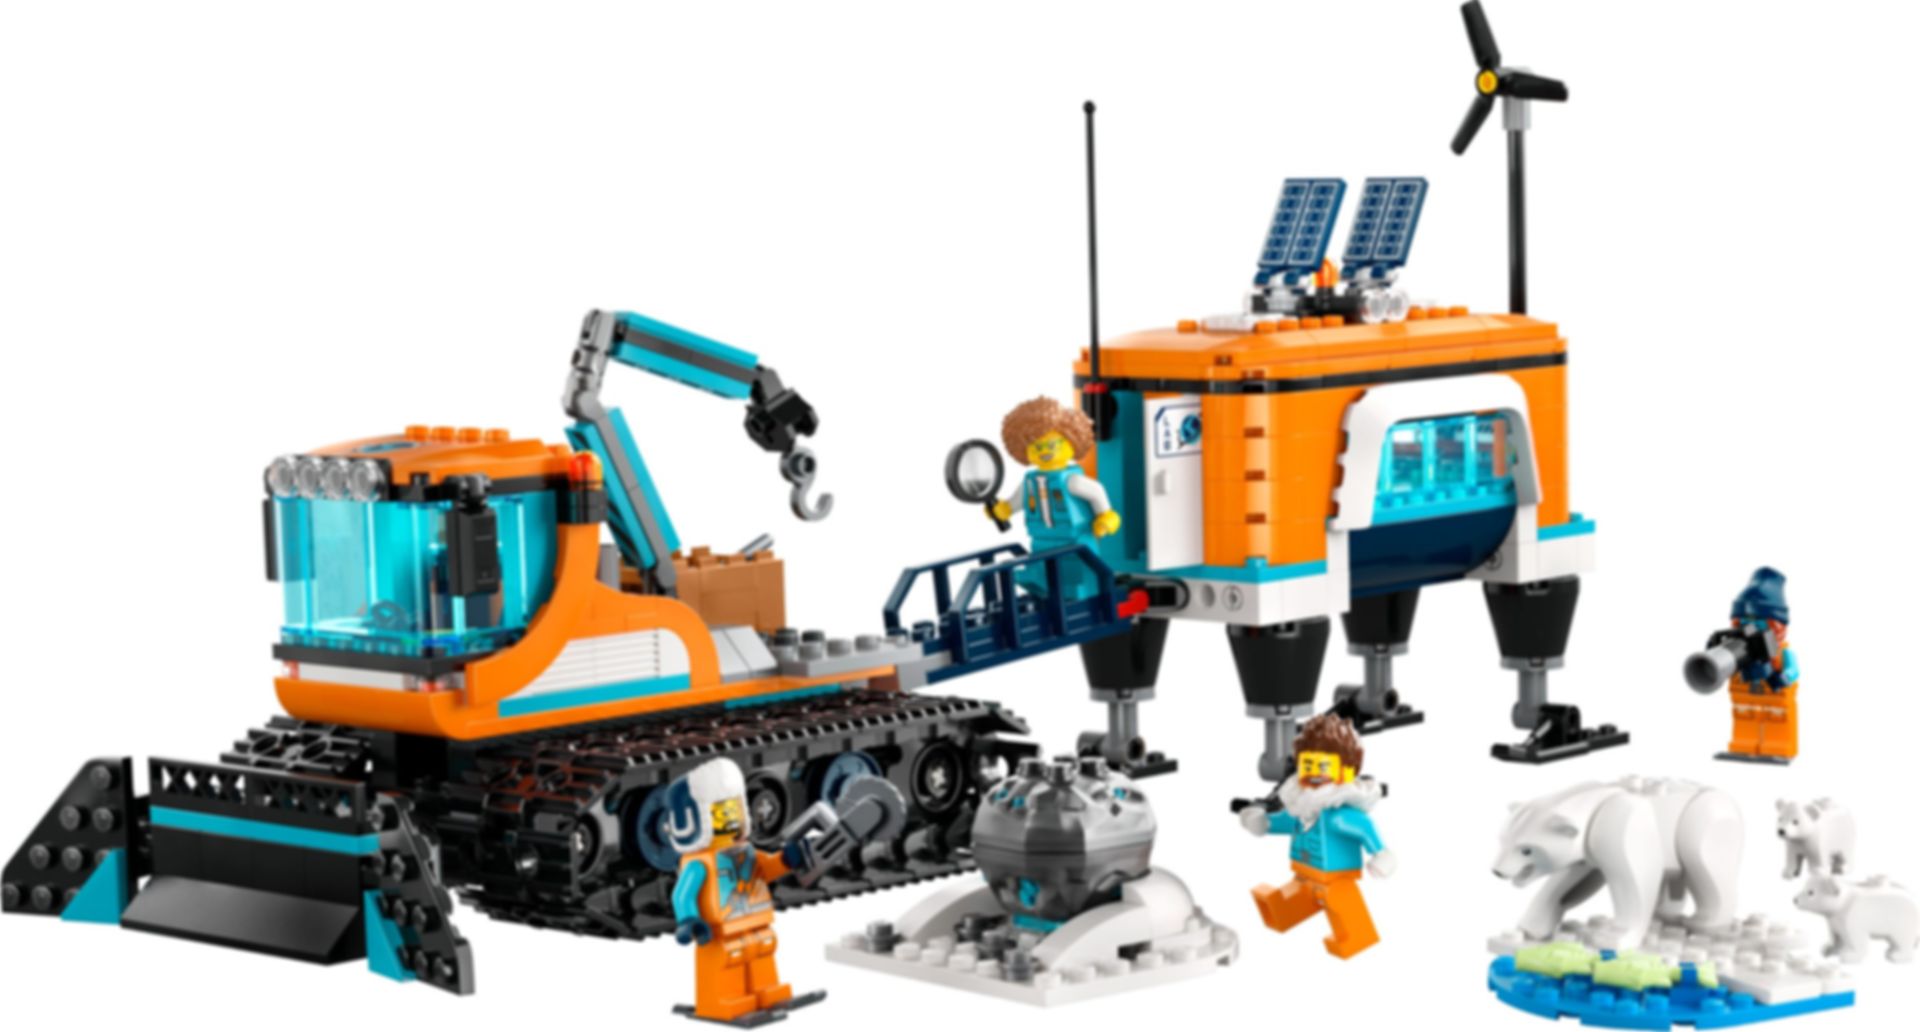 LEGO® City Arktis-Schneepflug mit mobilem Labor komponenten